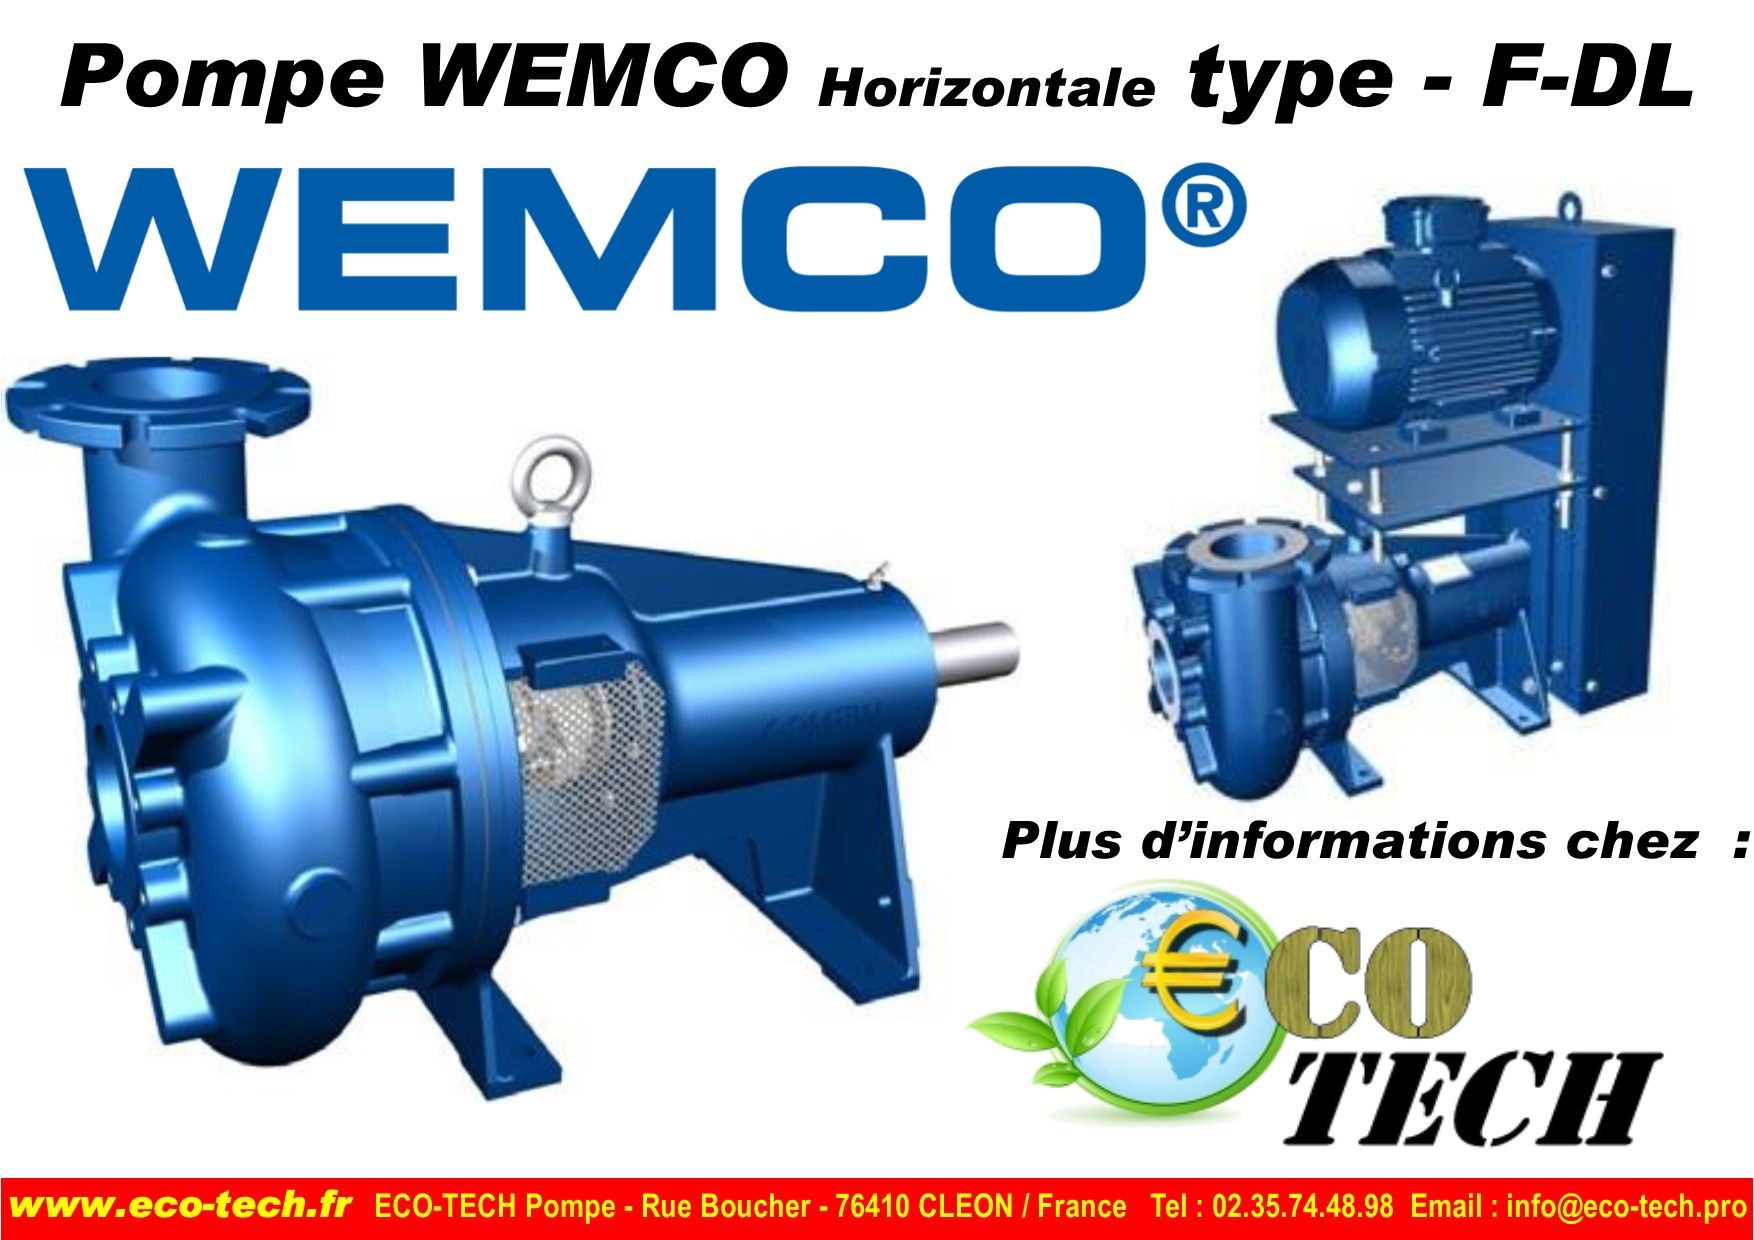 Pompe wemco type f-dl centrifuge horizontale atex en france normandie_0